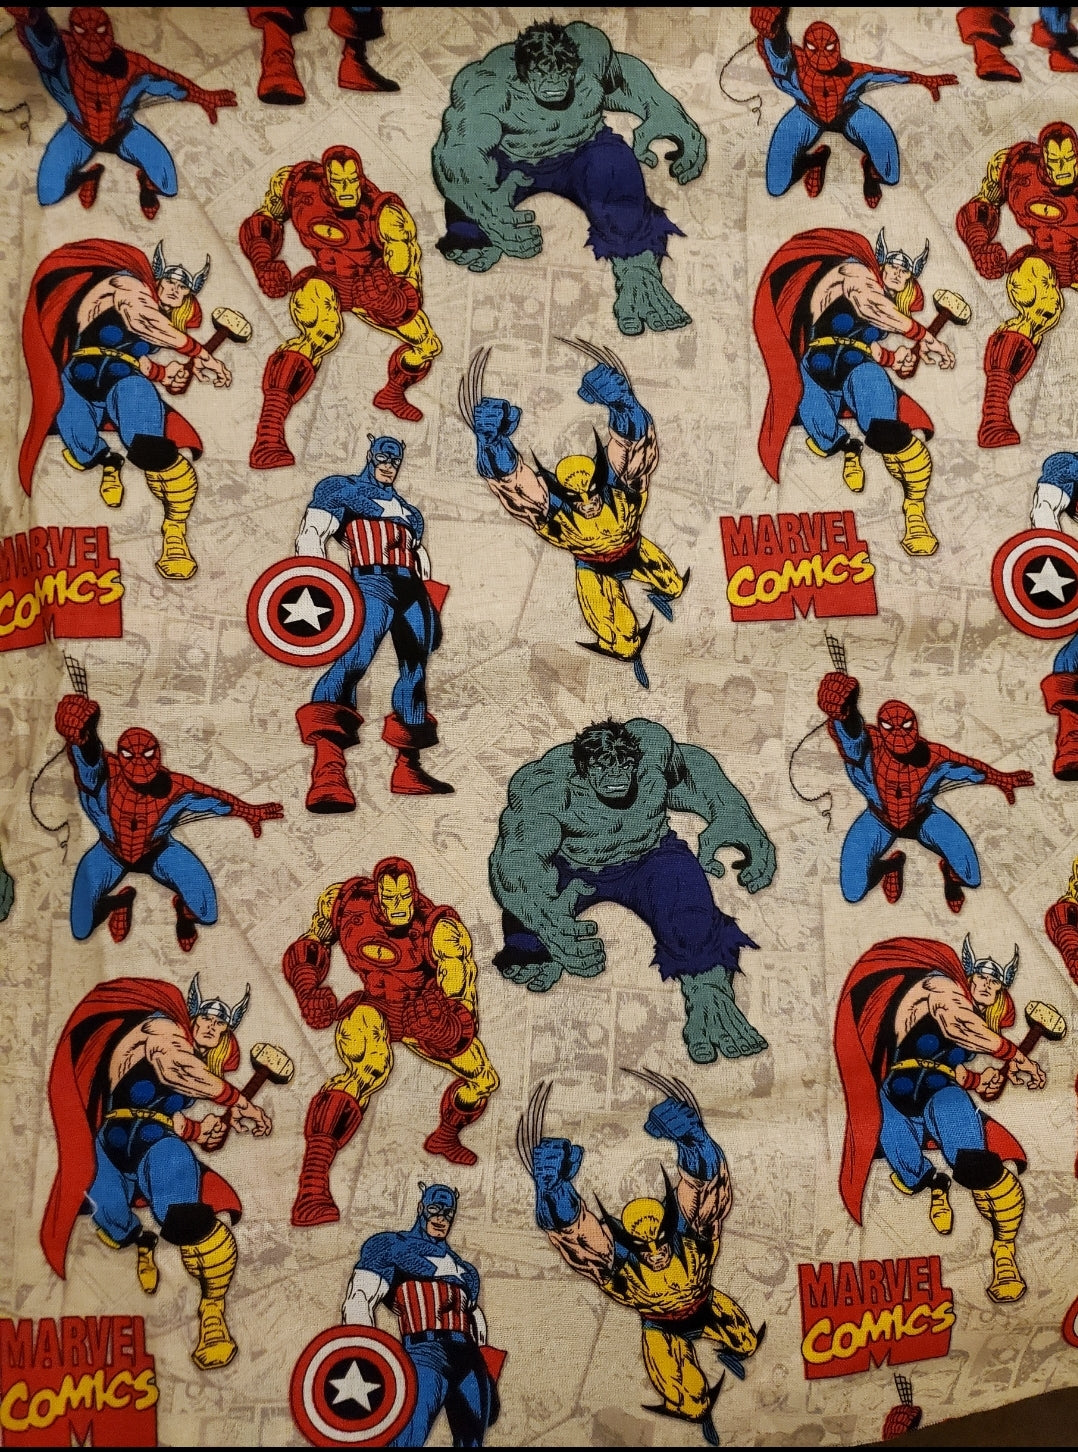 Marvel Heroes Fabric, Boys Fabric, Children's Cartoons Super